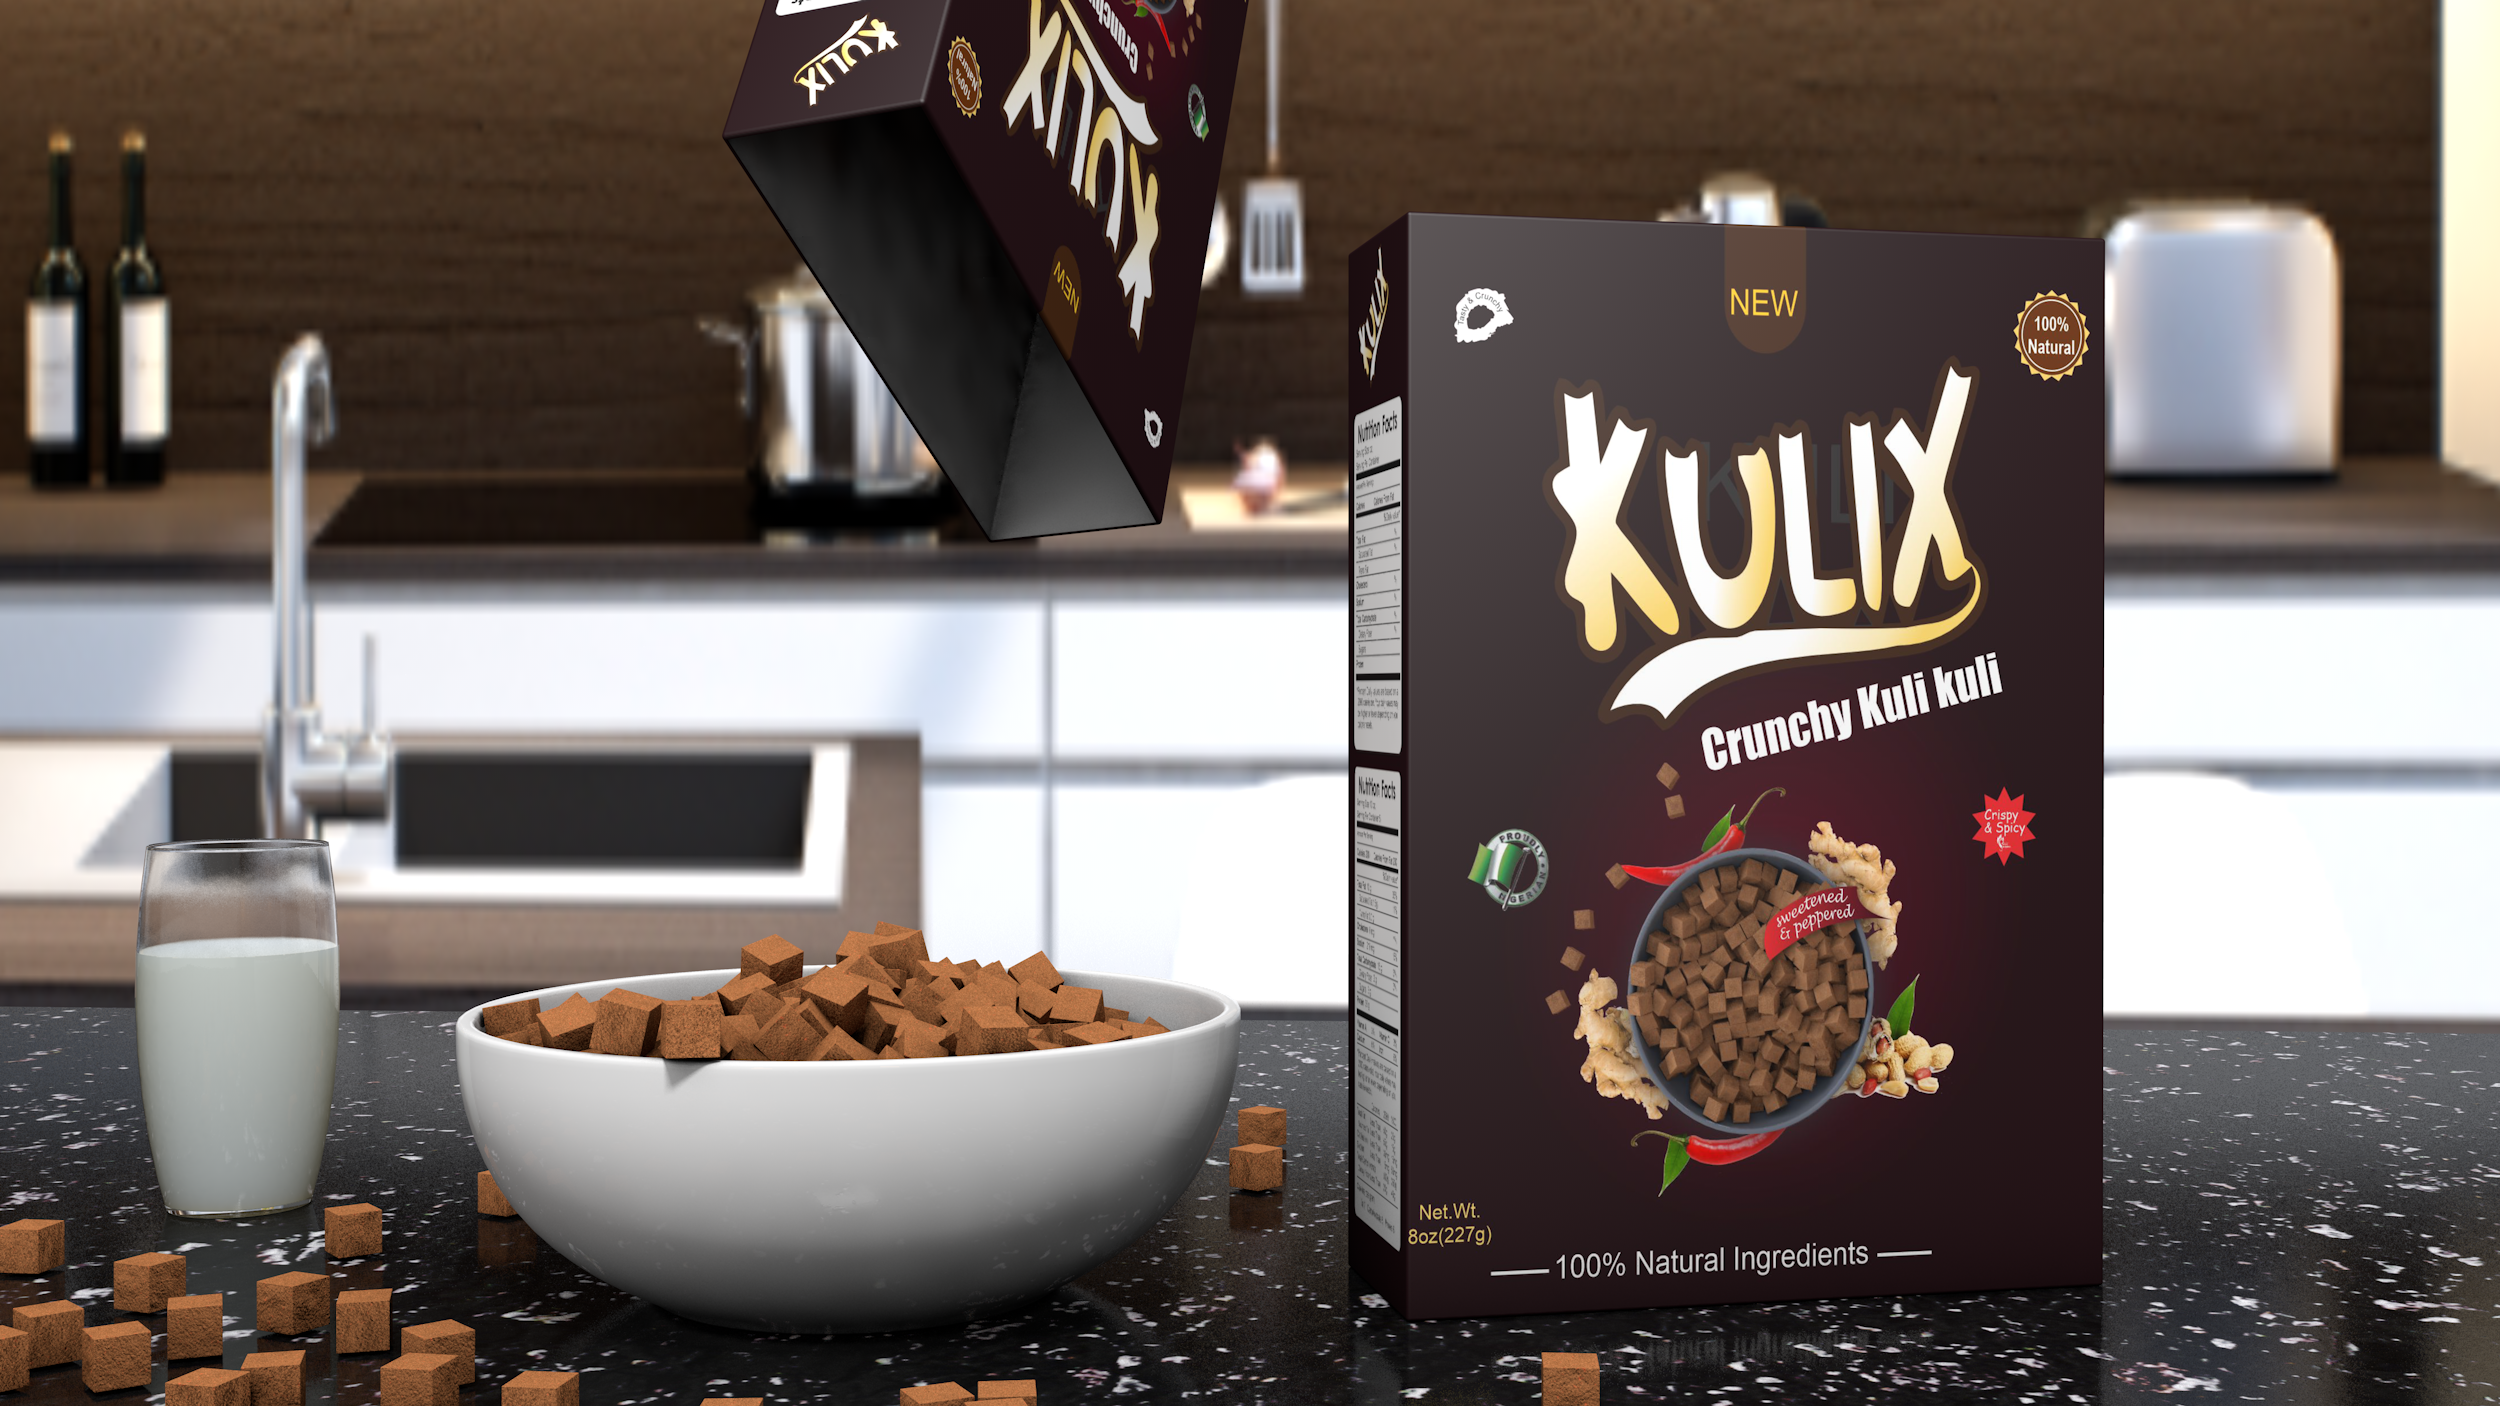 kulix Box Pack4, Taliban foods